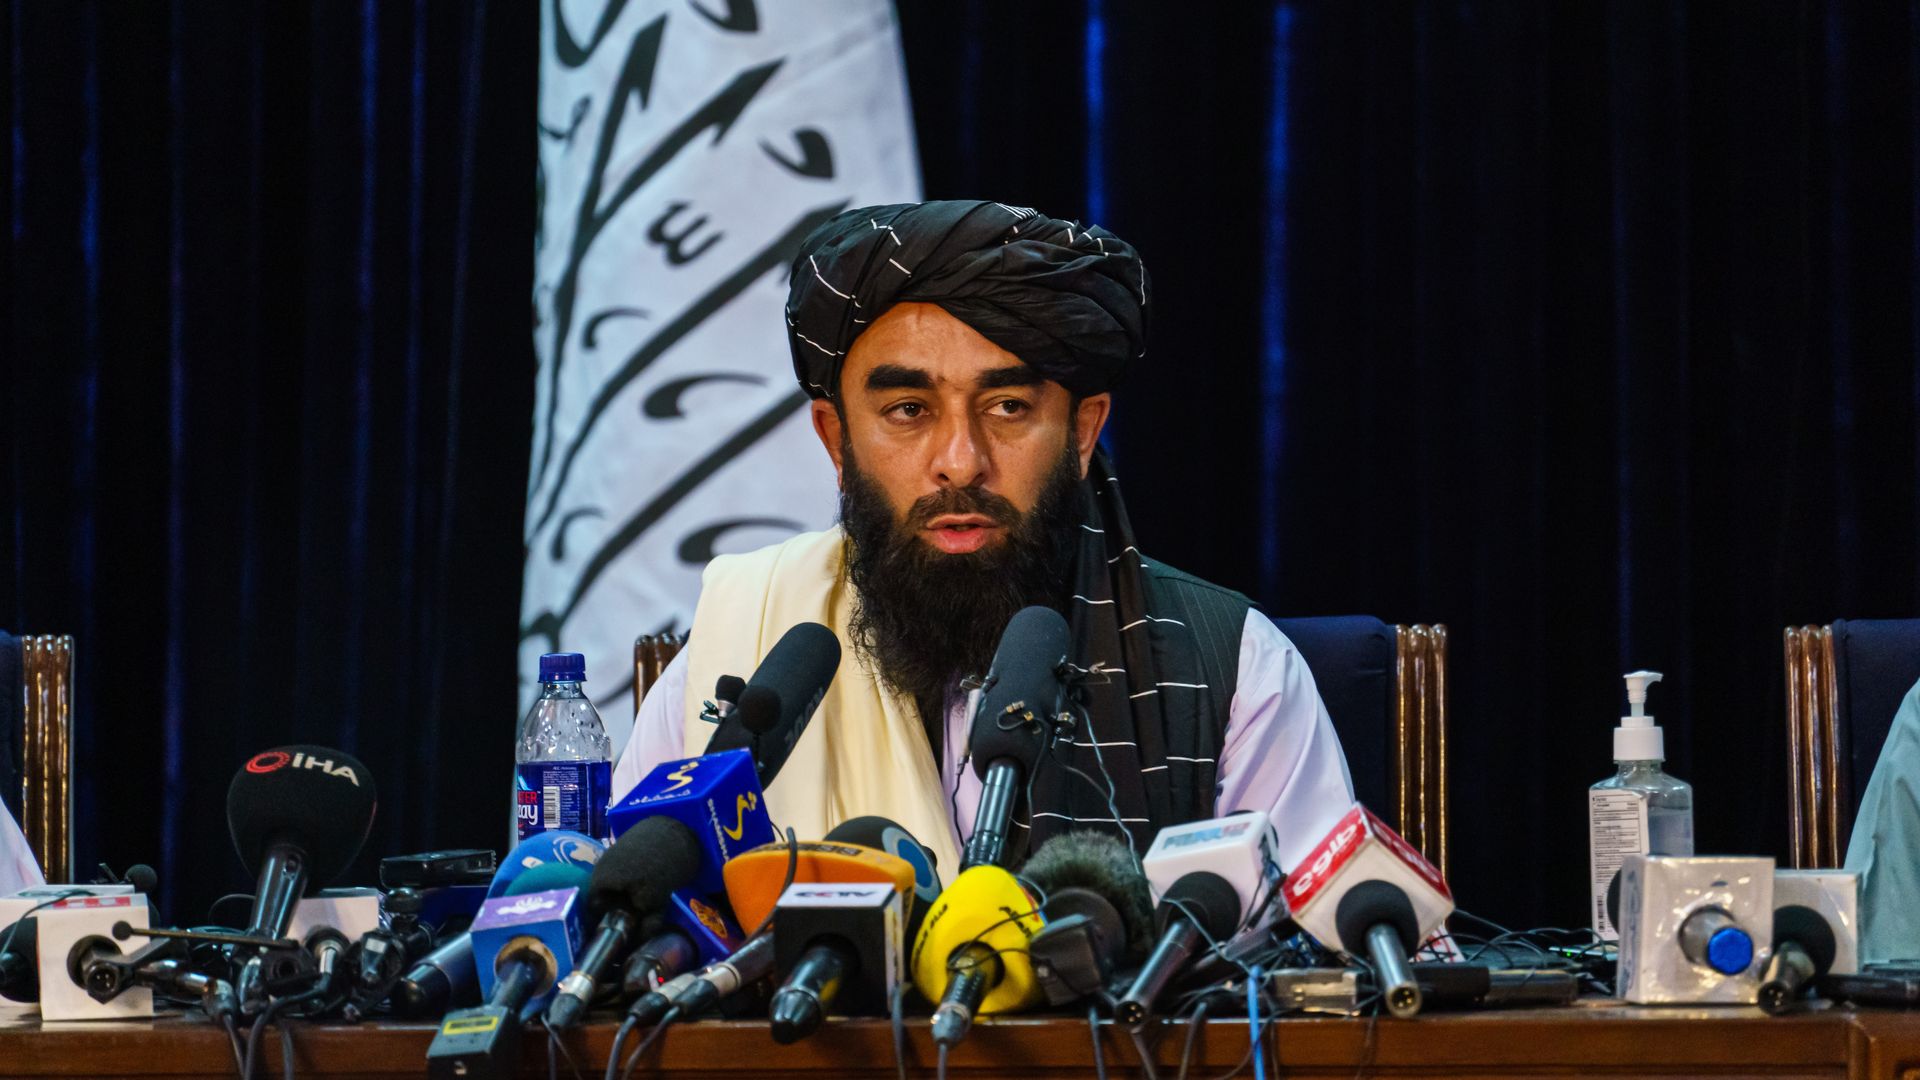 Taliban spokesman gives press conference